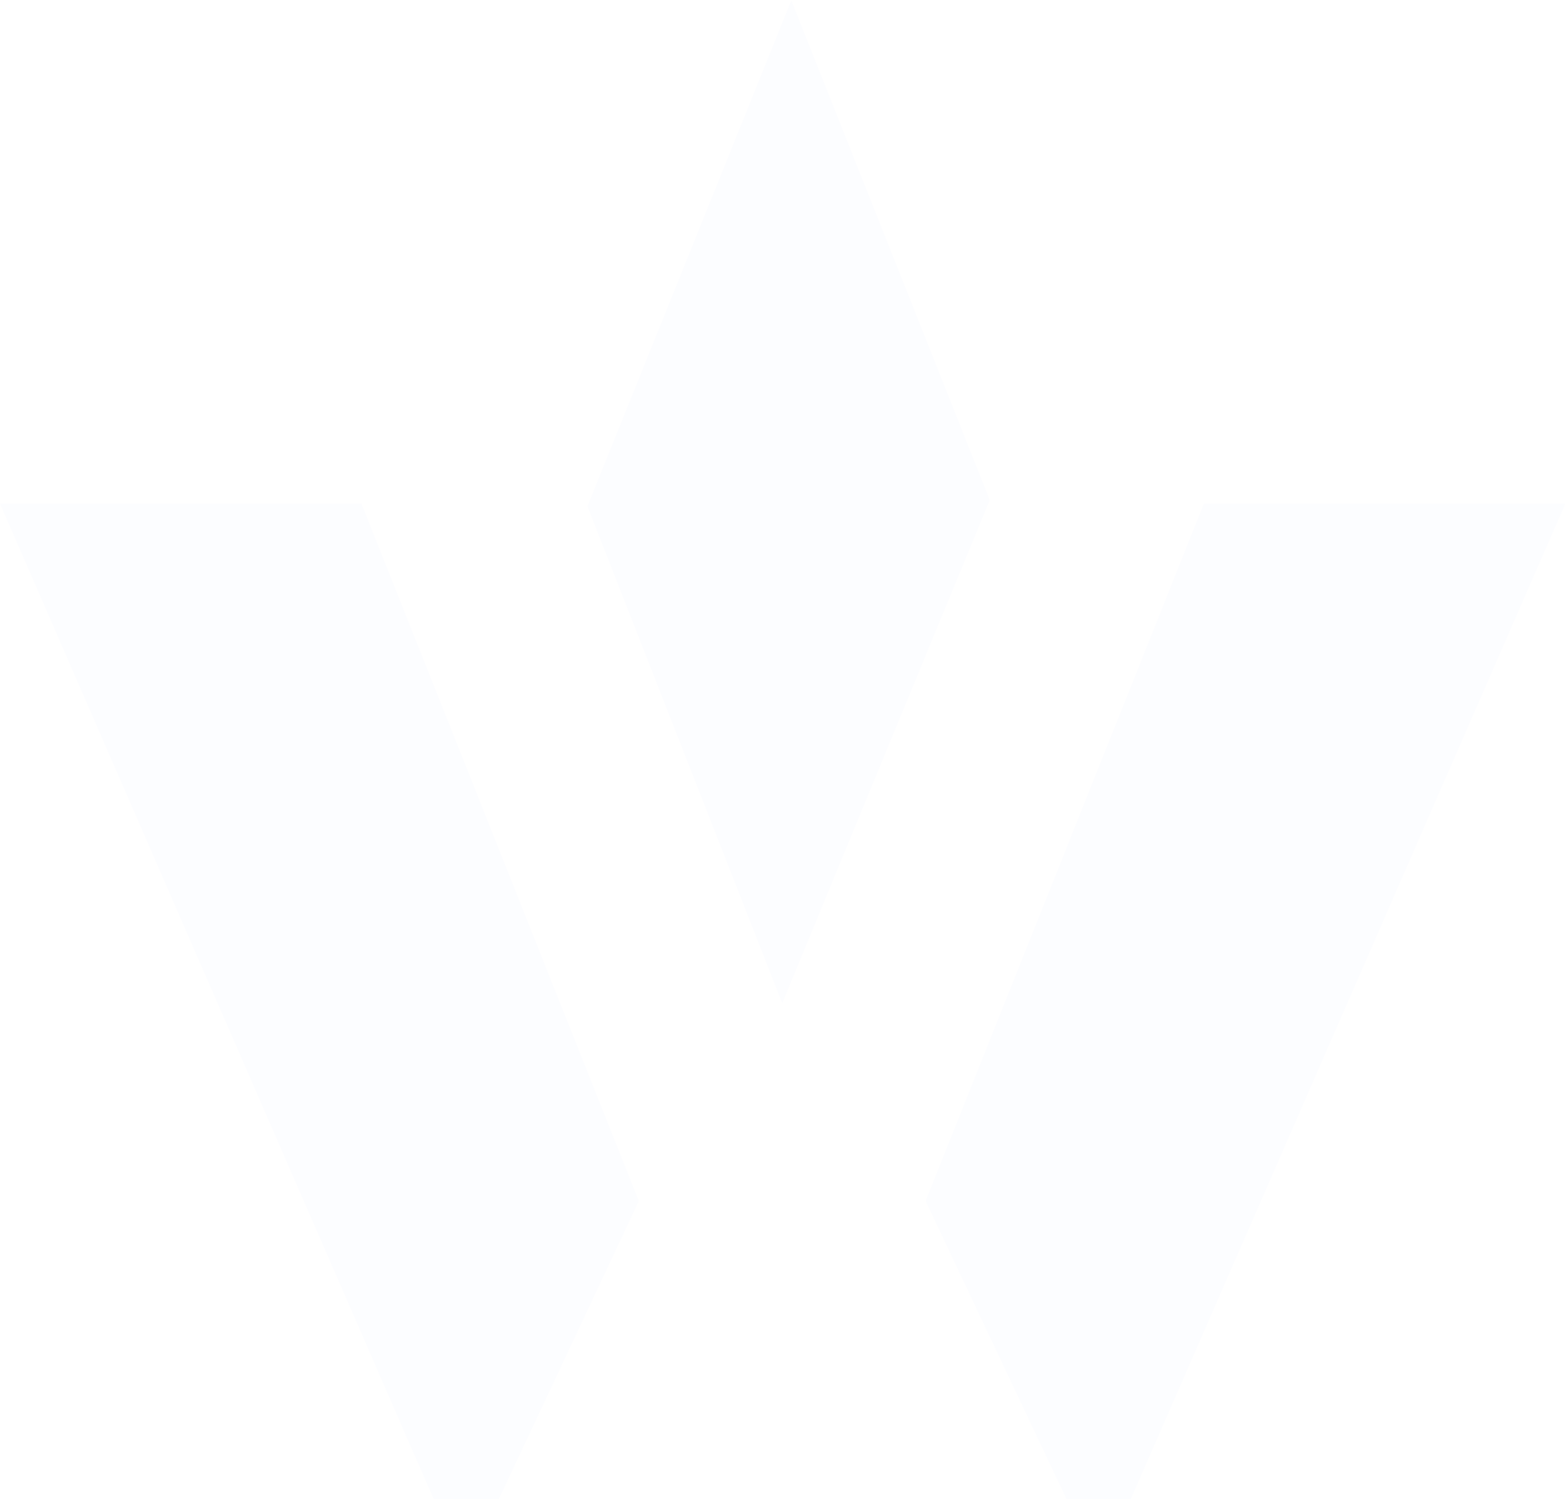 Whitestone REIT logo for dark backgrounds (transparent PNG)